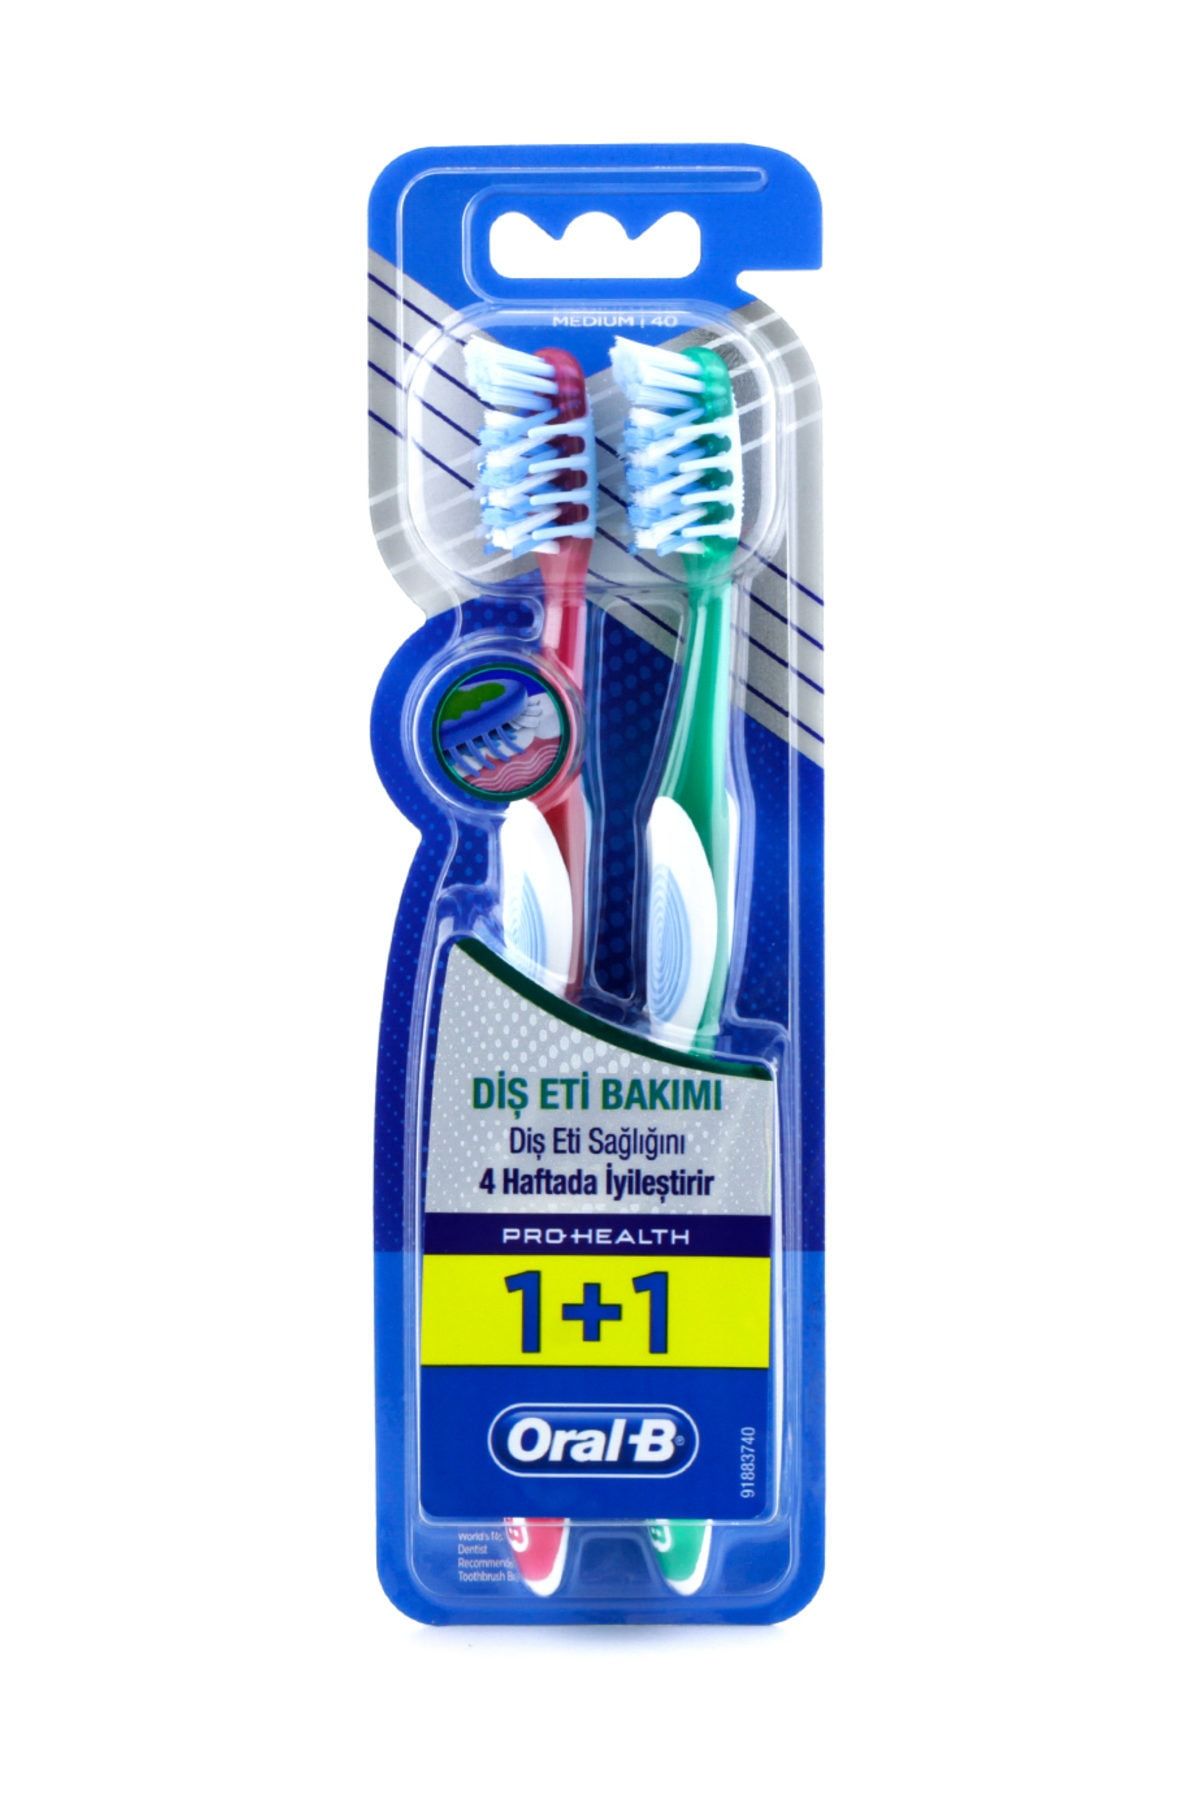 Oral-B Oral- B Pro Healt gum 1+1